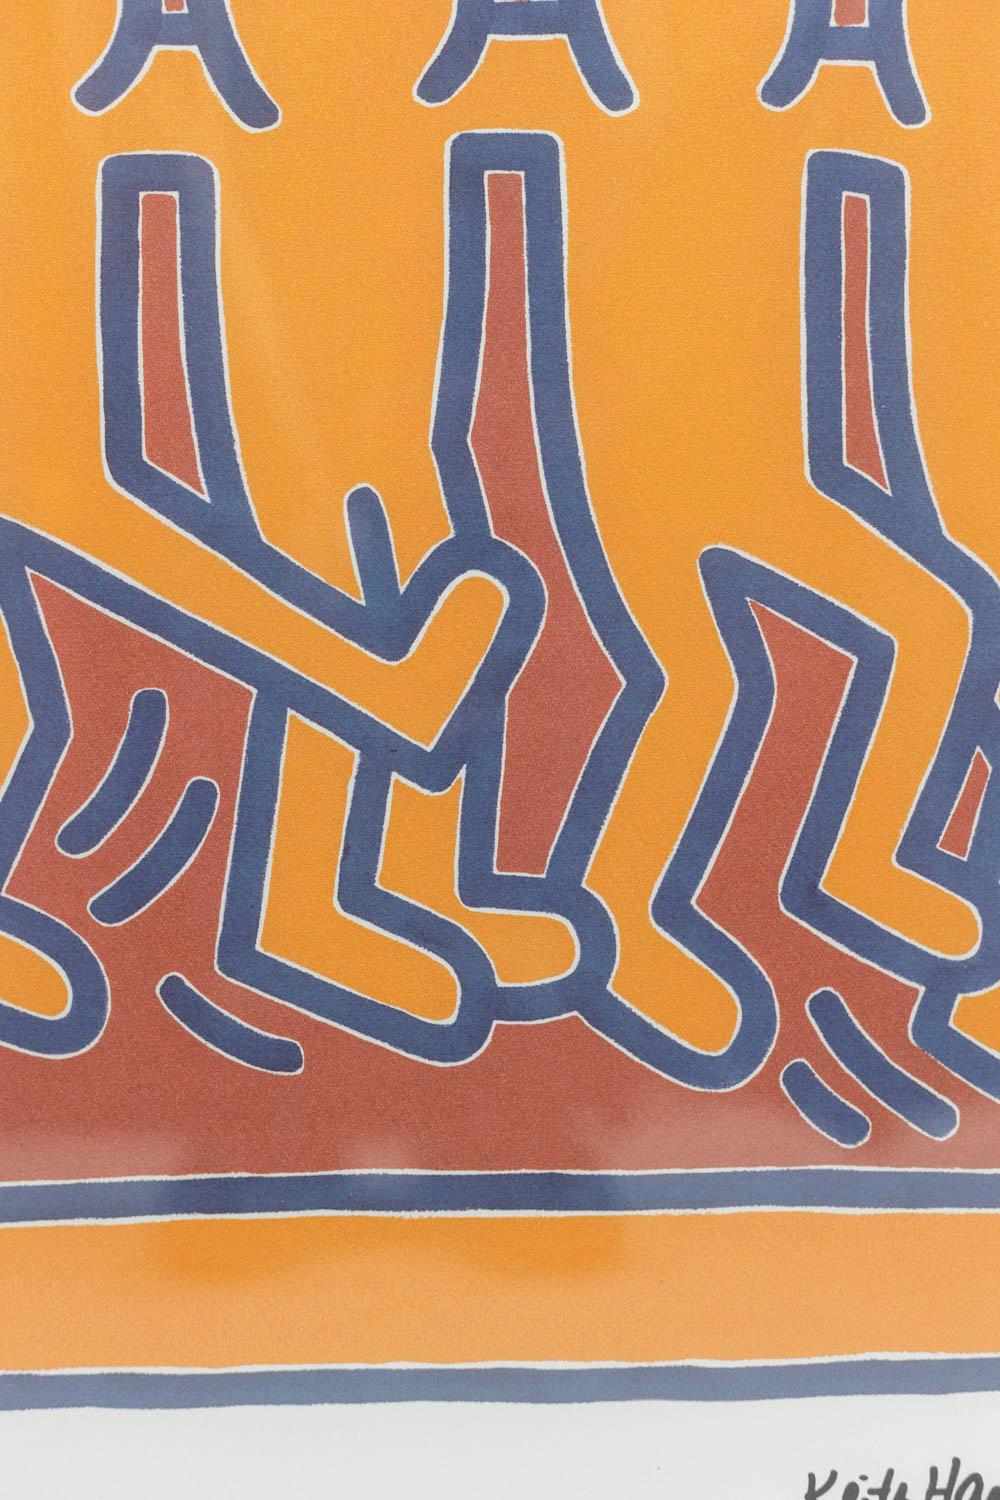 20ième siècle Keith Haring, lithographie, années 1990